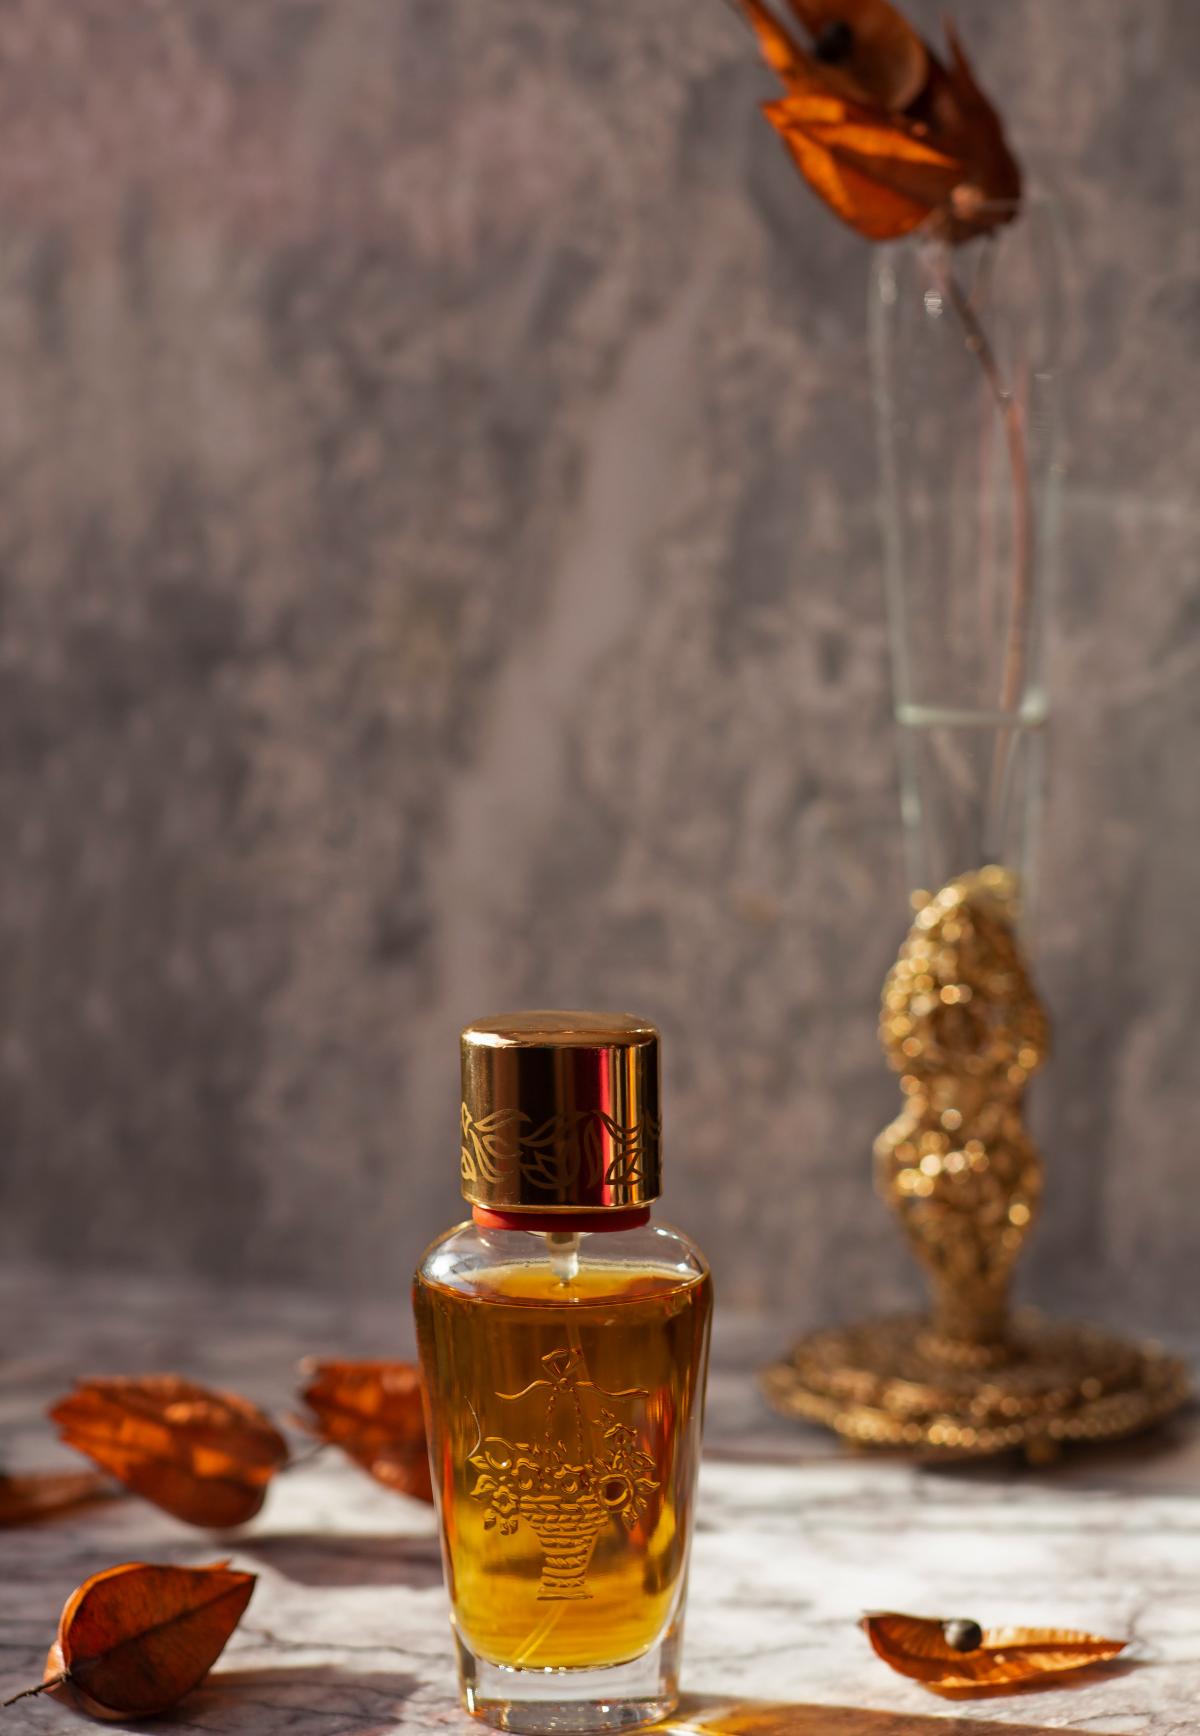 Apercu Houbigant perfume - a fragrance for women 2000